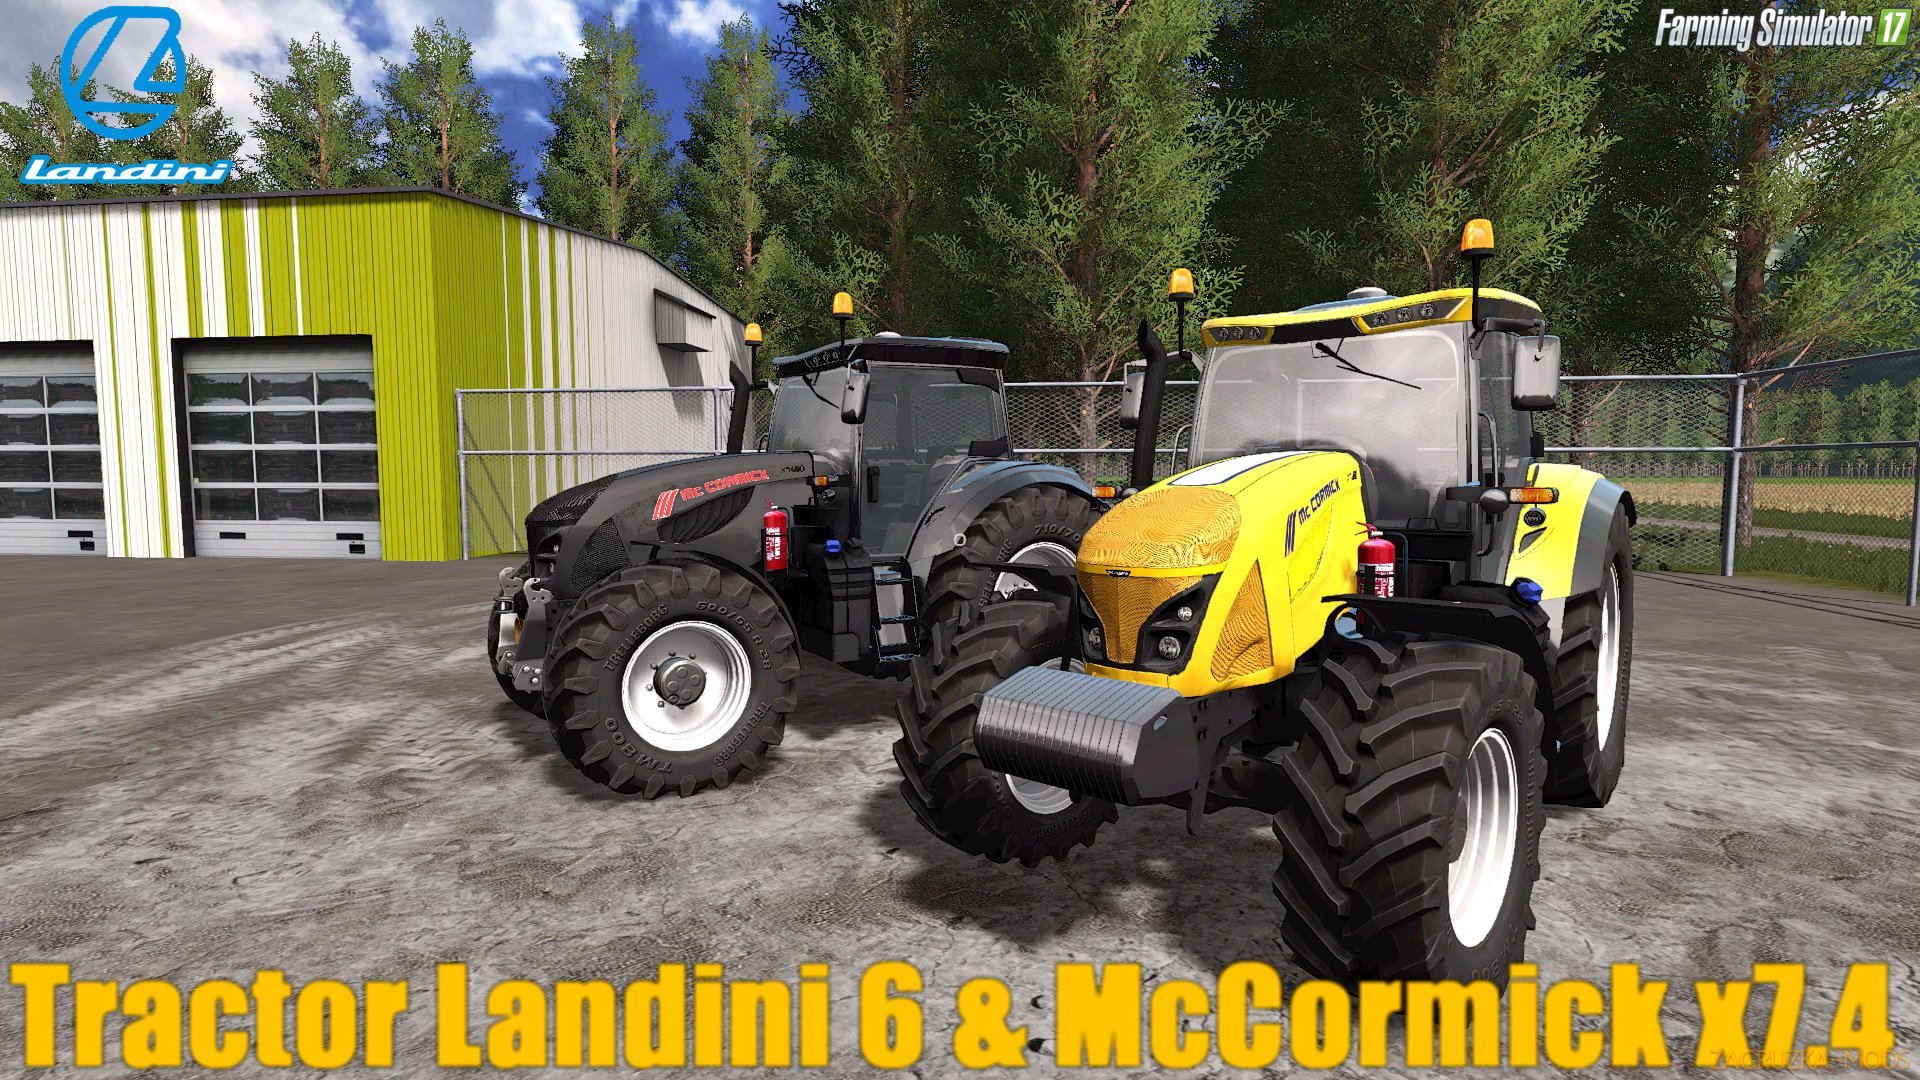 Landini 6 & McCormick x7.4 v2.0 for FS 17